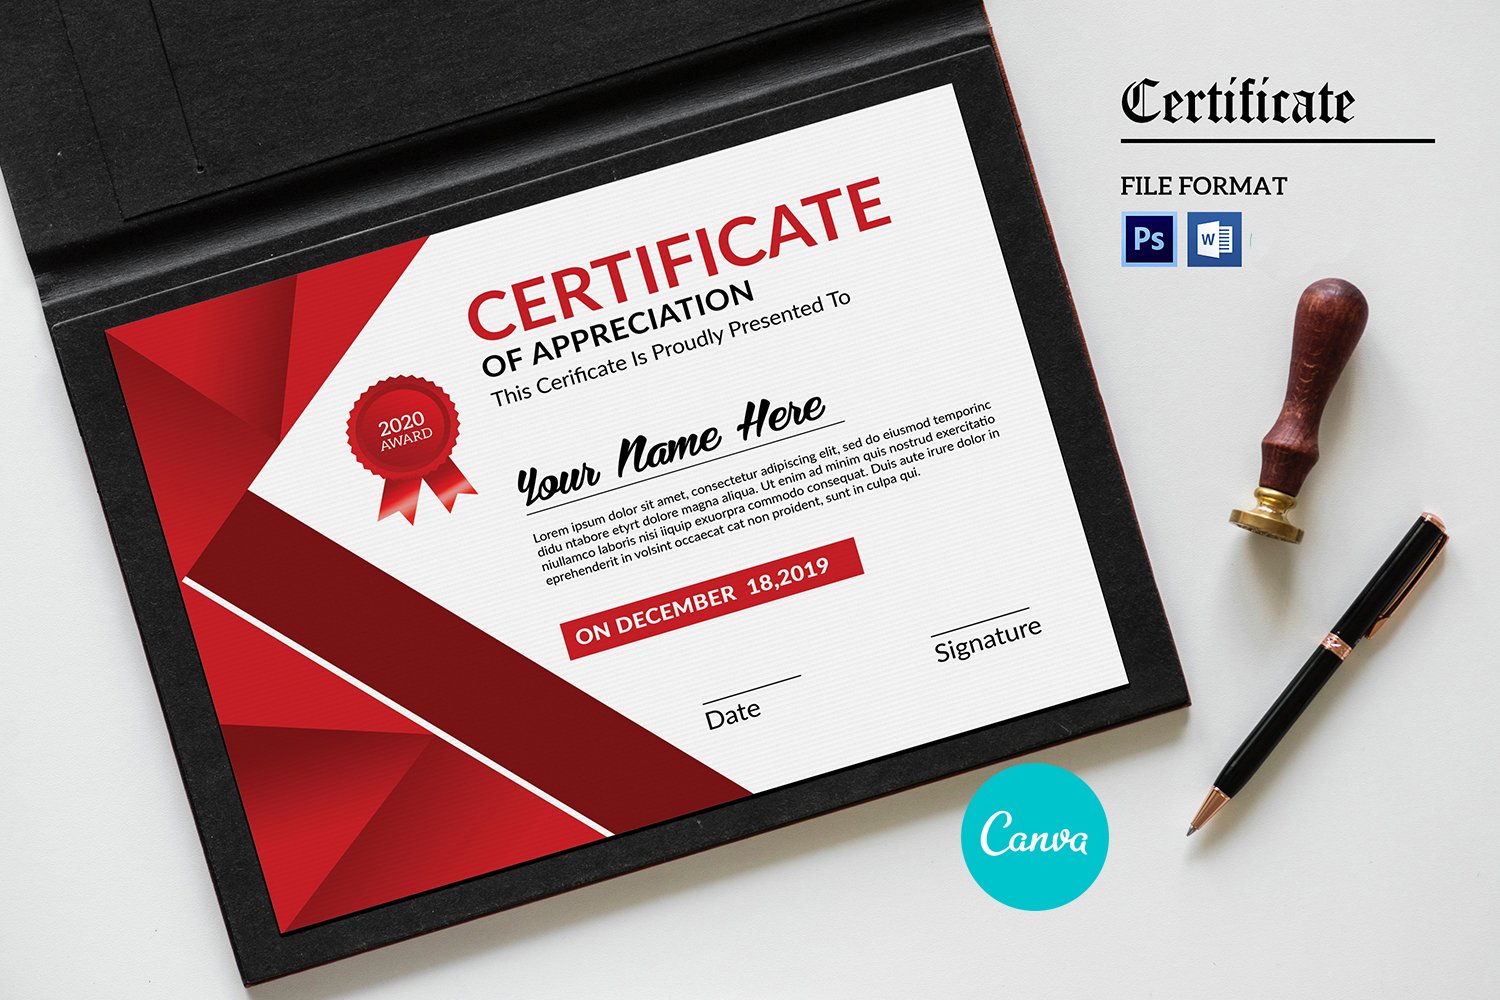 Printable Certificate V25 cover image.